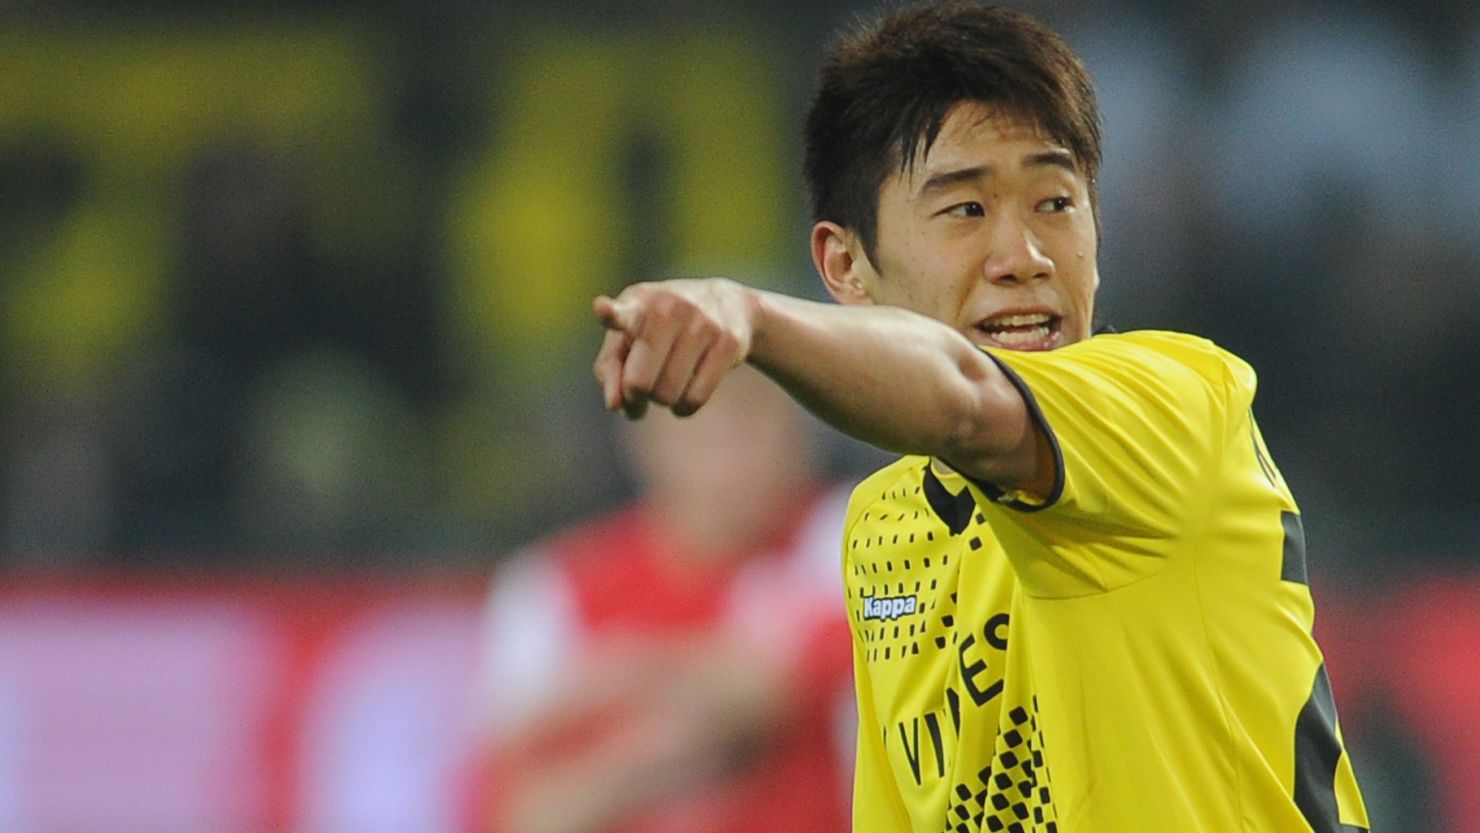 Borussia Dortmund's Shinji Kagawa scored the second goal in a 2-0 win over Mainz on Saturday